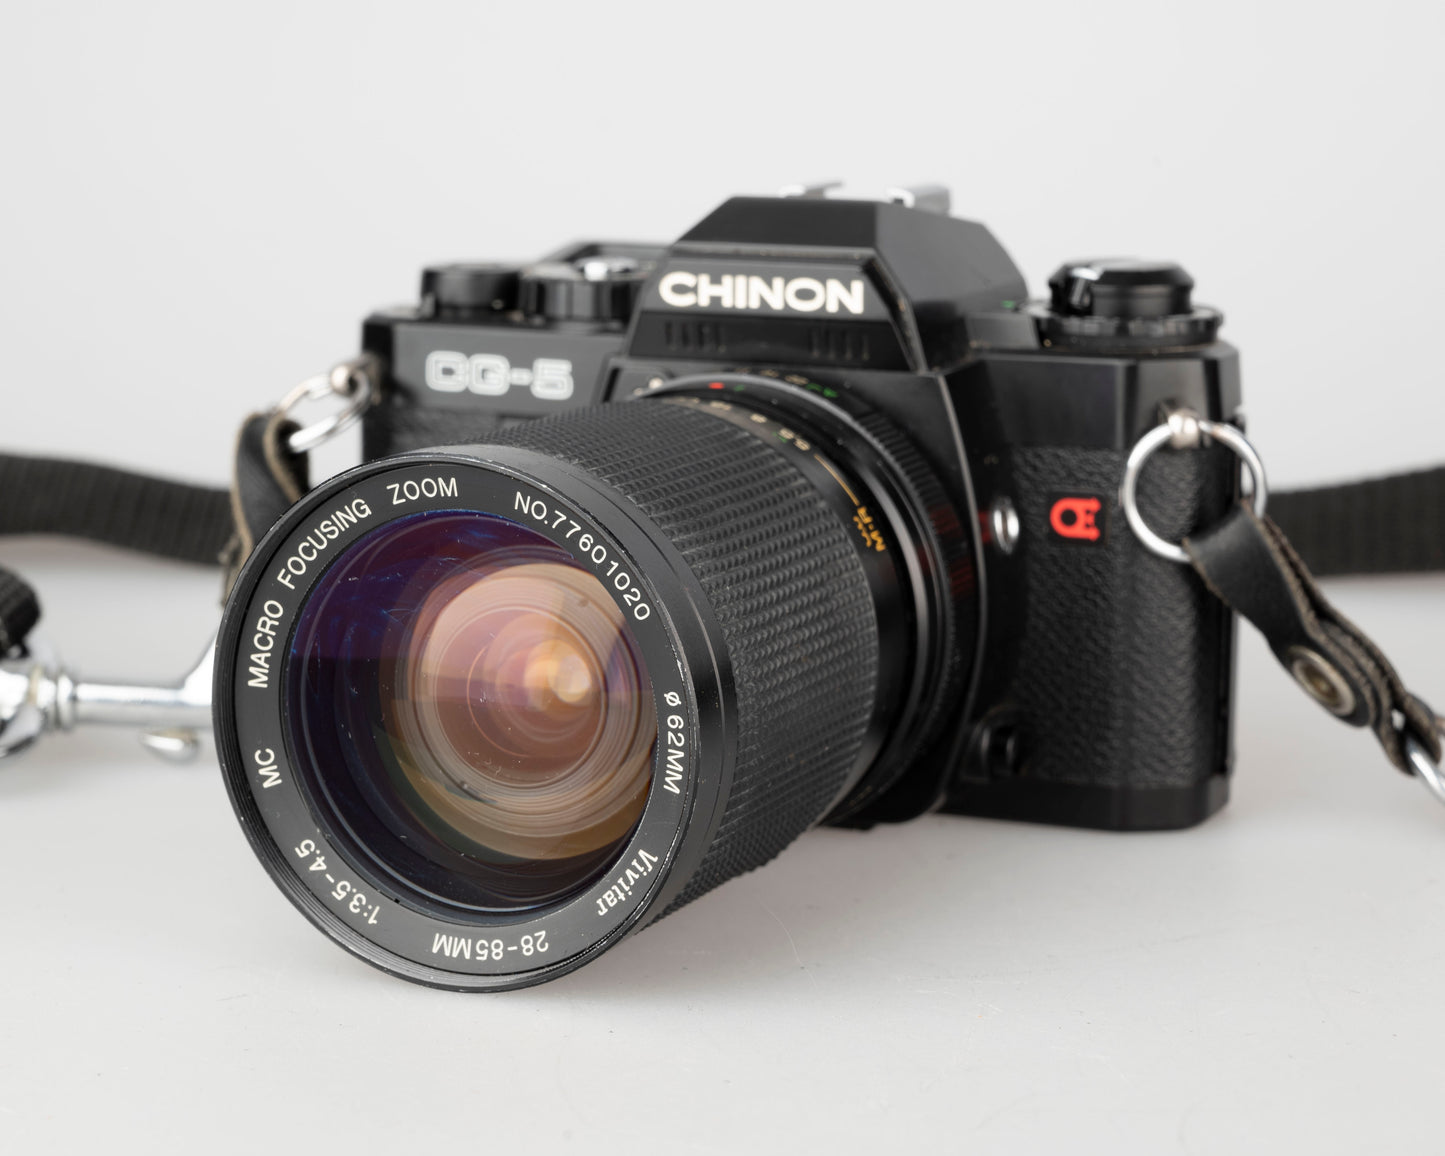 Chinon CG-5 35mm film SLR camera w/ 28-85mm zoom (uses K-mount lenses)